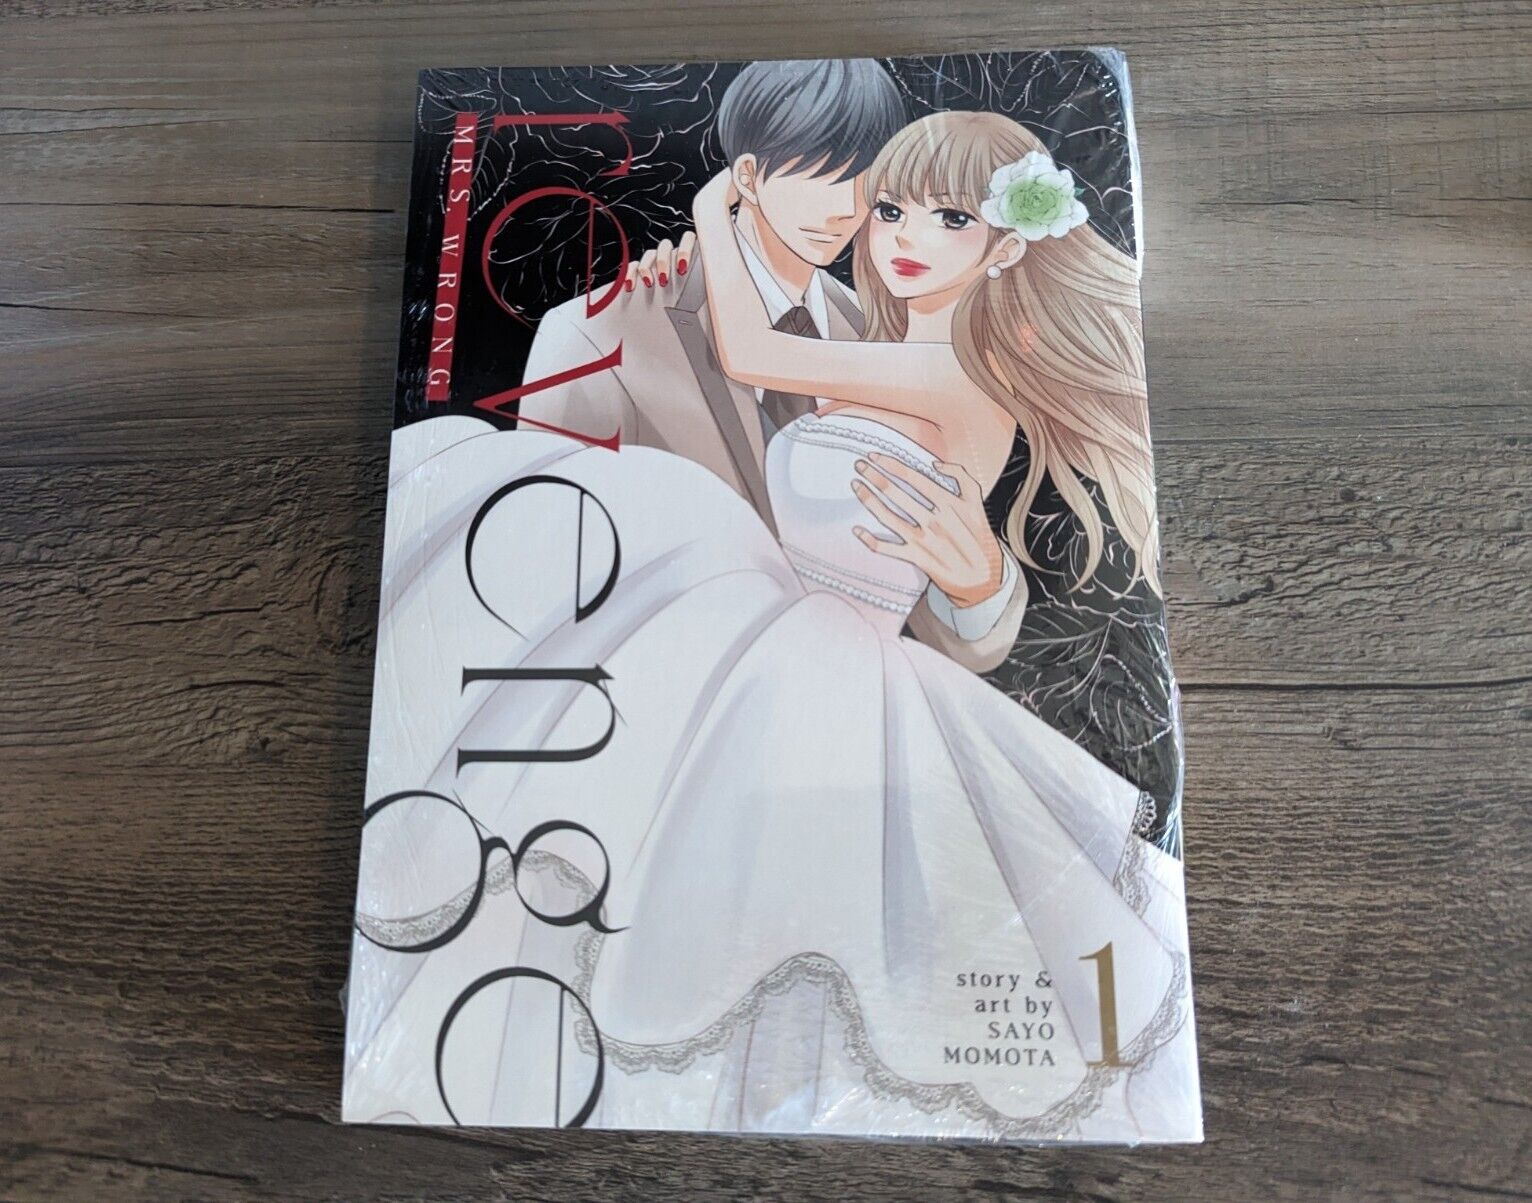 Revenge: Mrs. Wrong Vol 1 - Brand New English Manga Sayo Momota Josei Romance